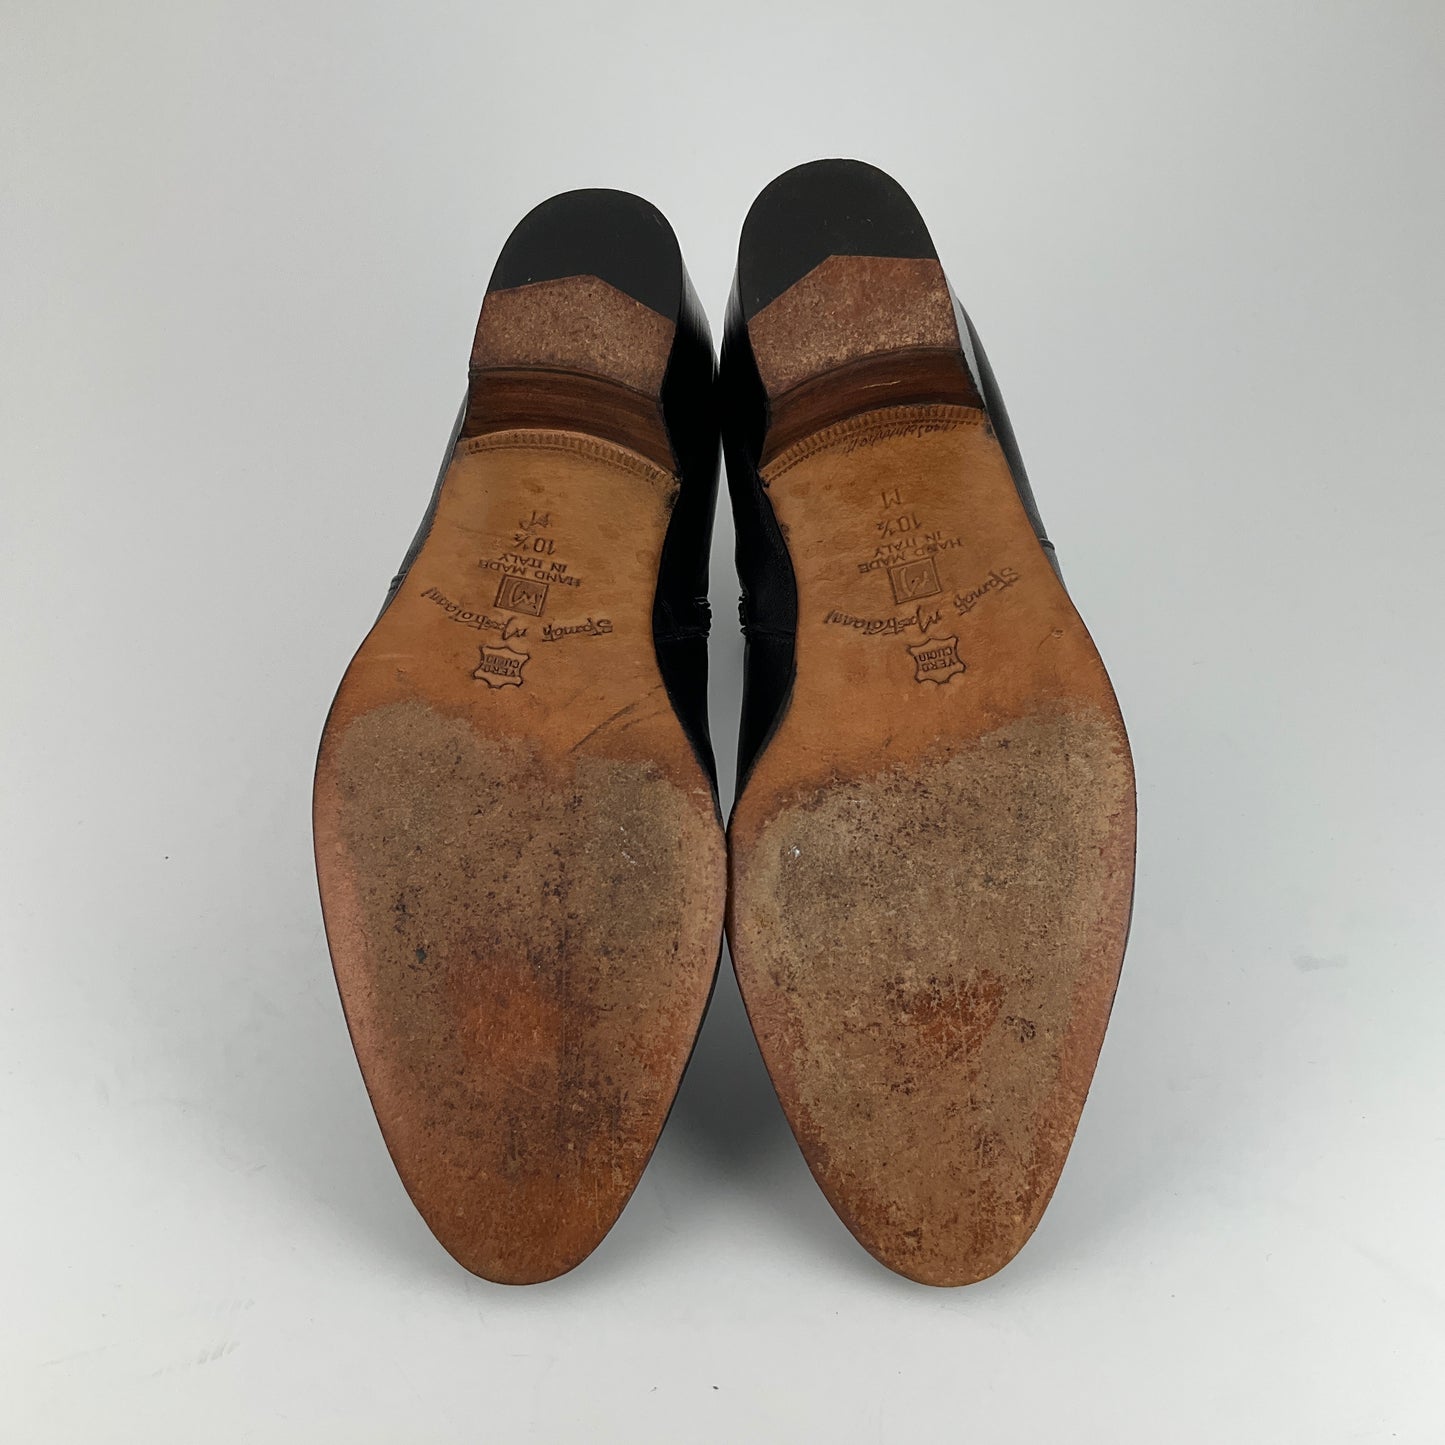 Stamati Mastroianni - Italian Leather Boots - Size 10.5